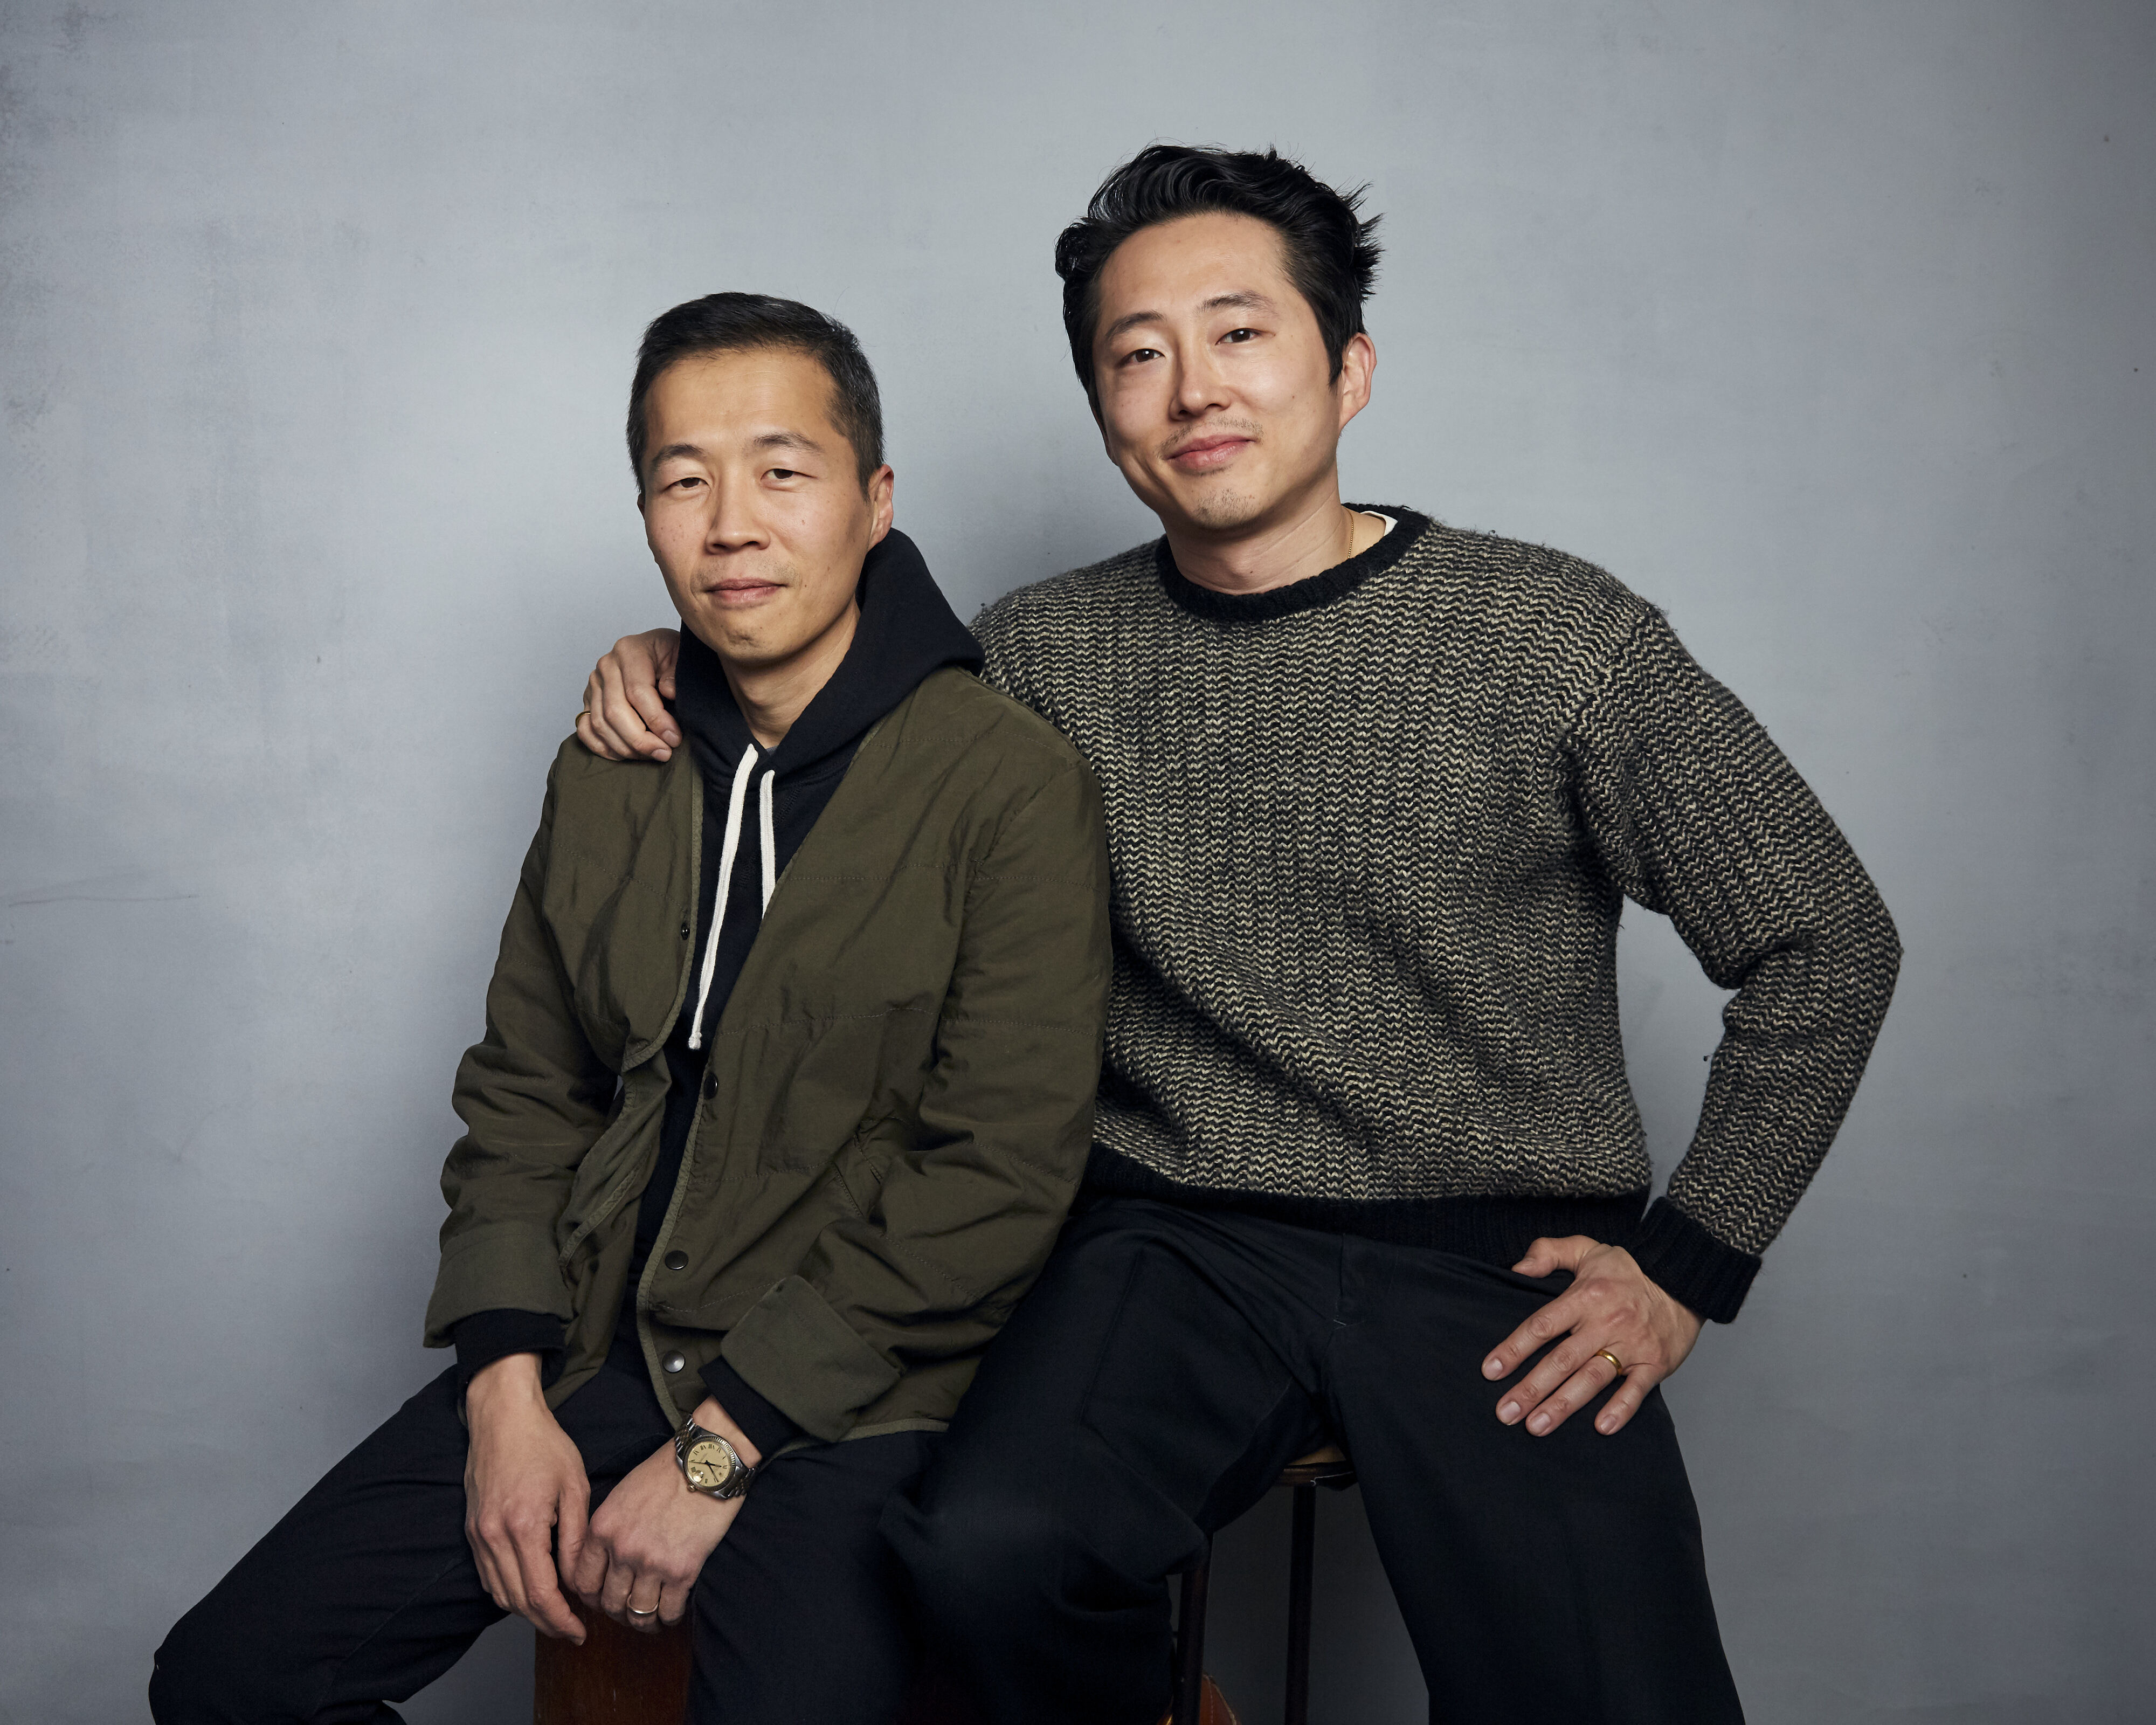 University of Utah alum Lee Isaac Chung tells his family story in 'Minari,'  a Sundance winner and Oscar contender